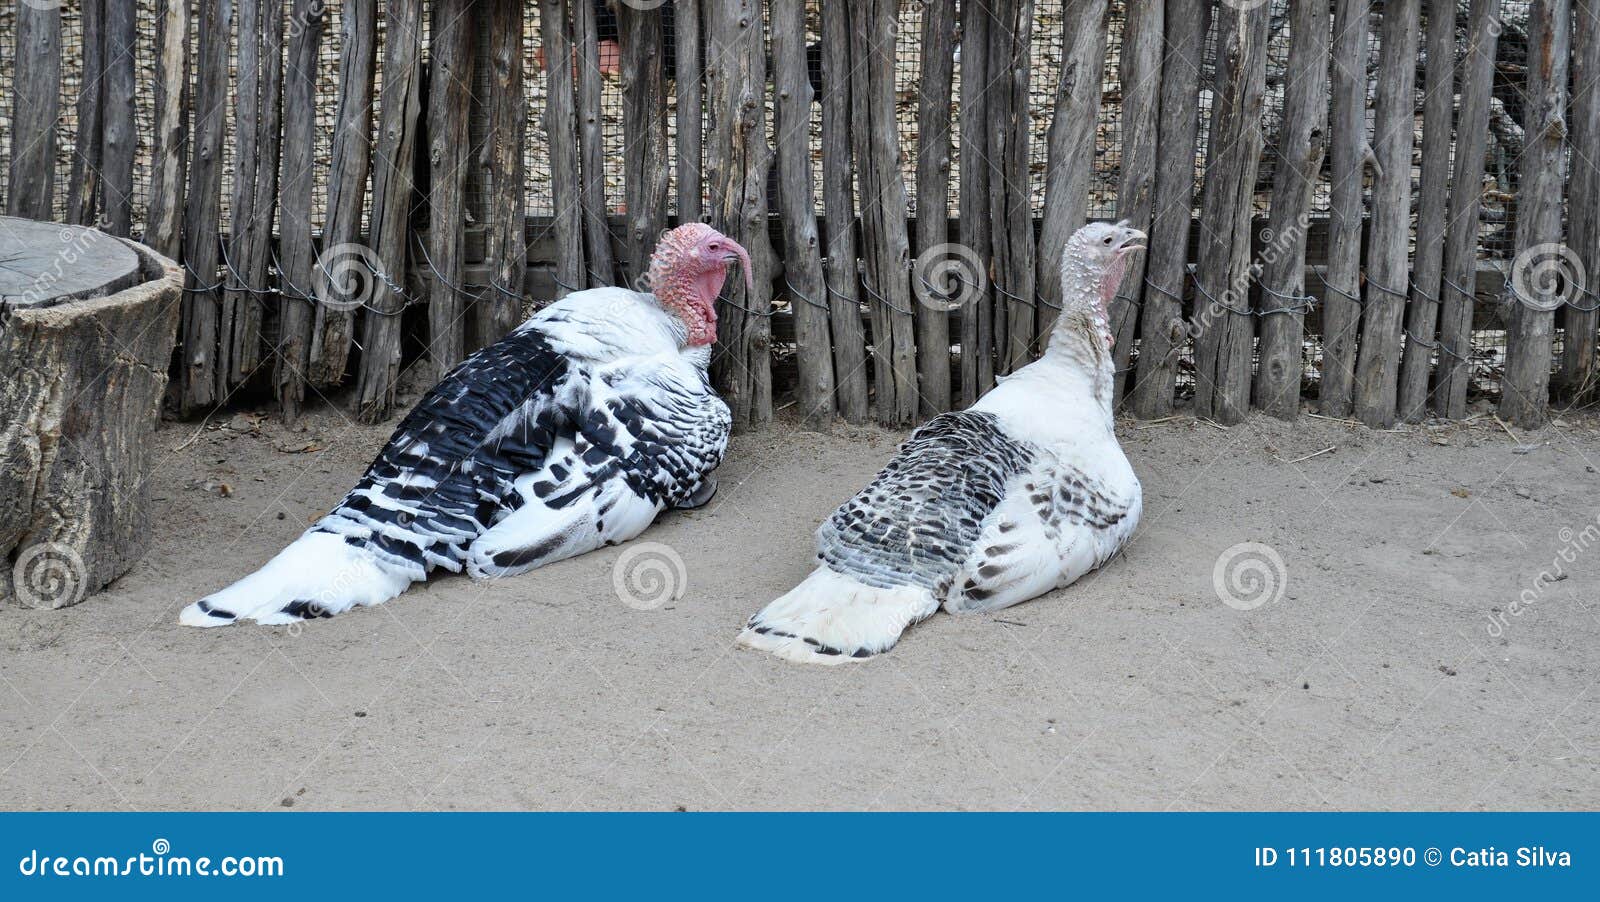 a couple of turkeys